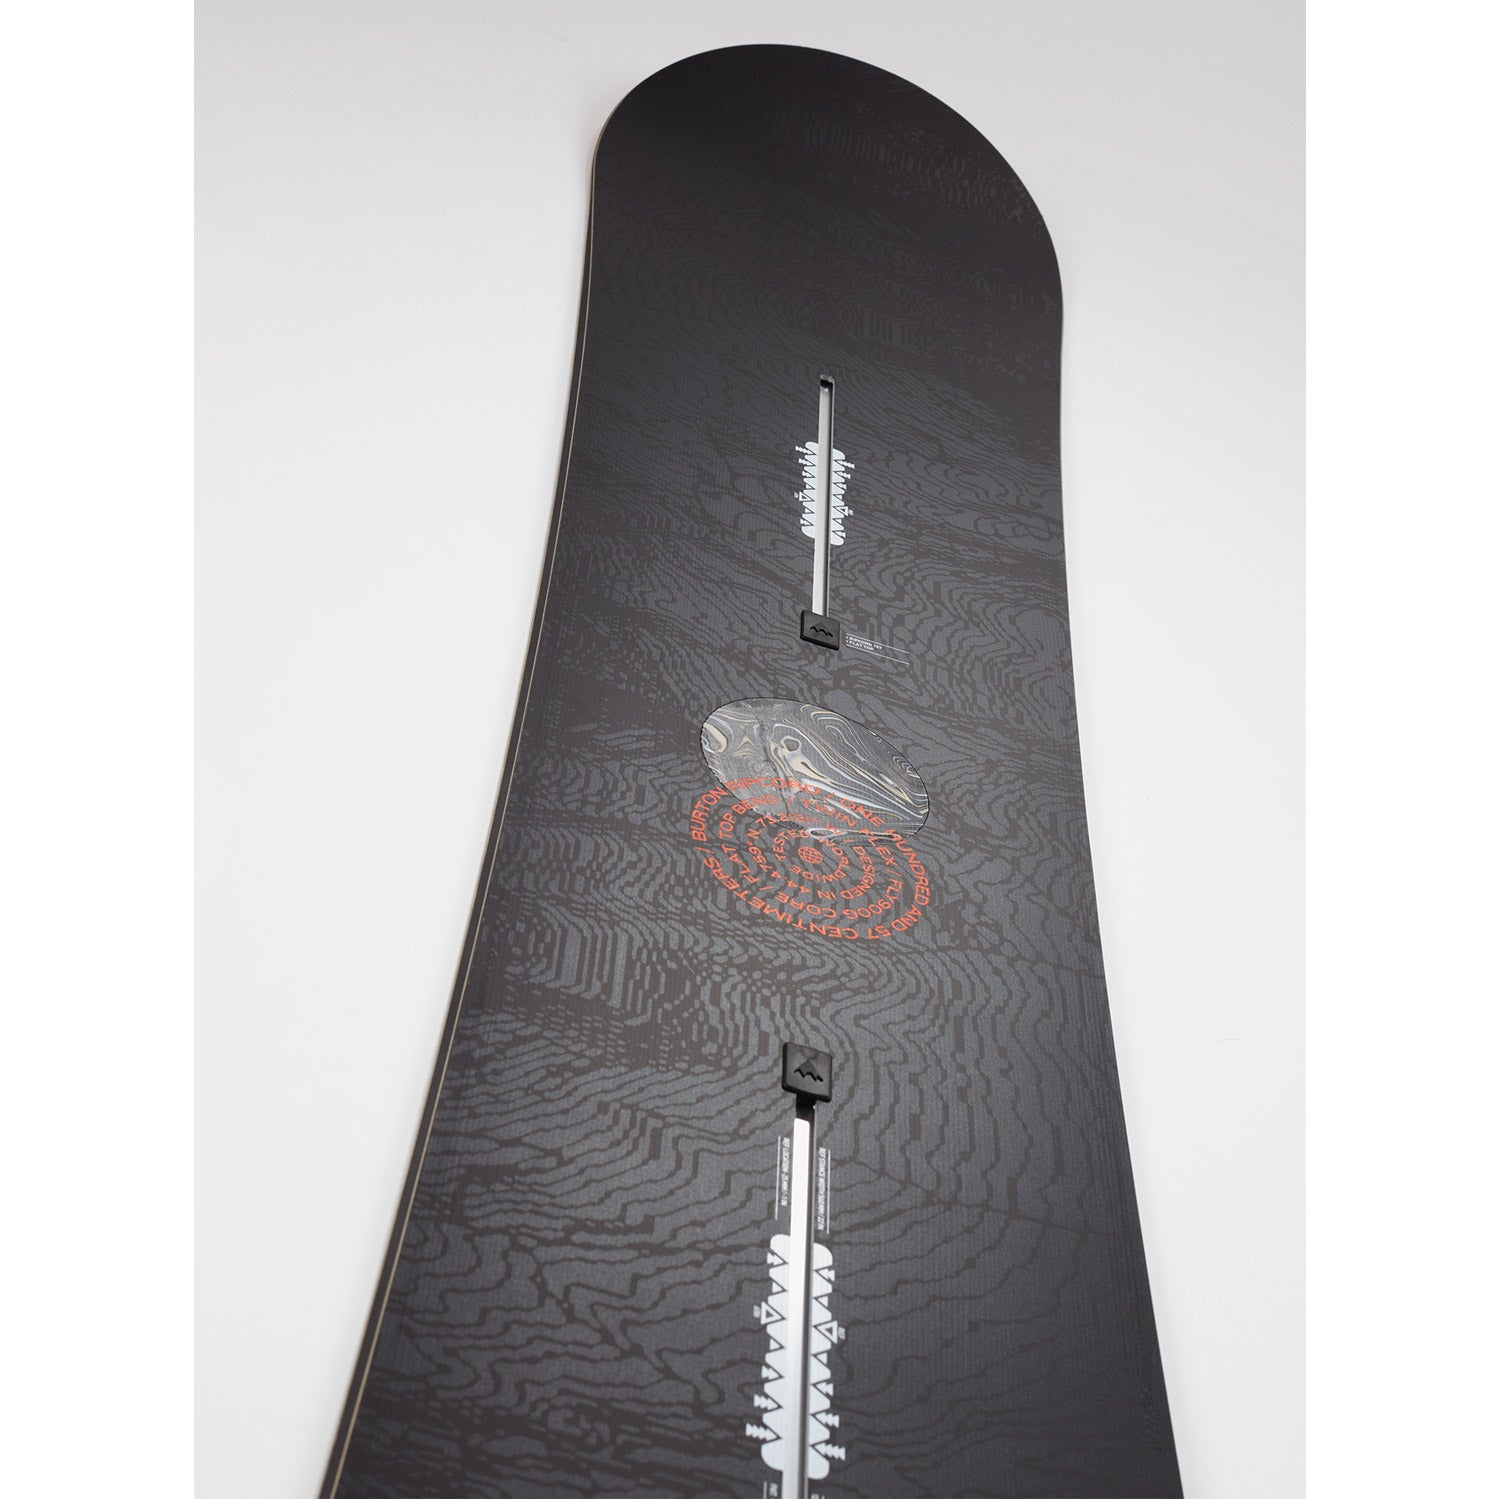 Ripcord Snowboard